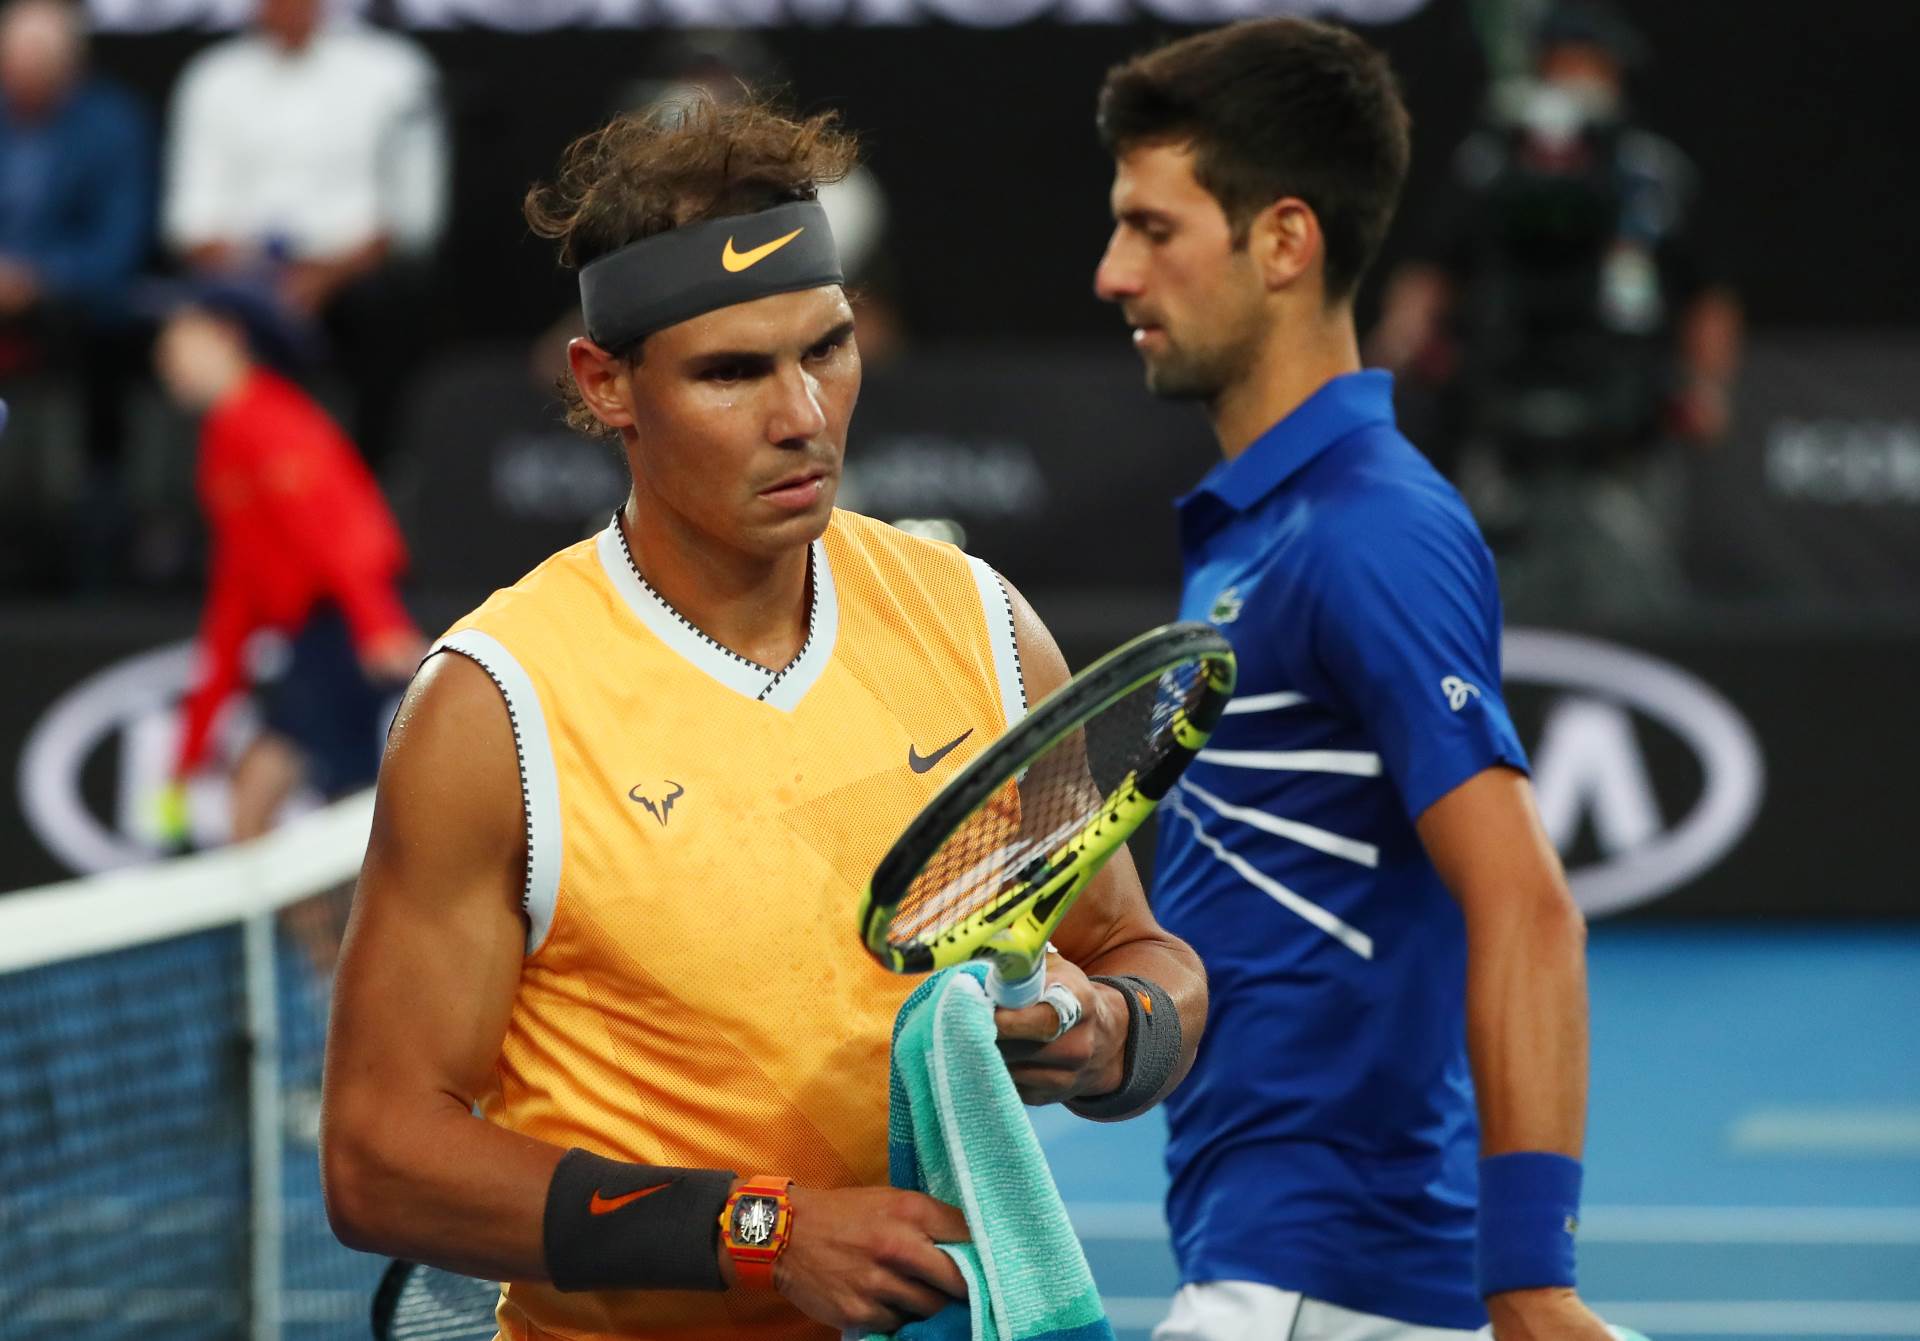  /Rolan-Garos-2020.-Novak-Djokovic-Rafael-Nadal-favoriti-Dominik-Tim 